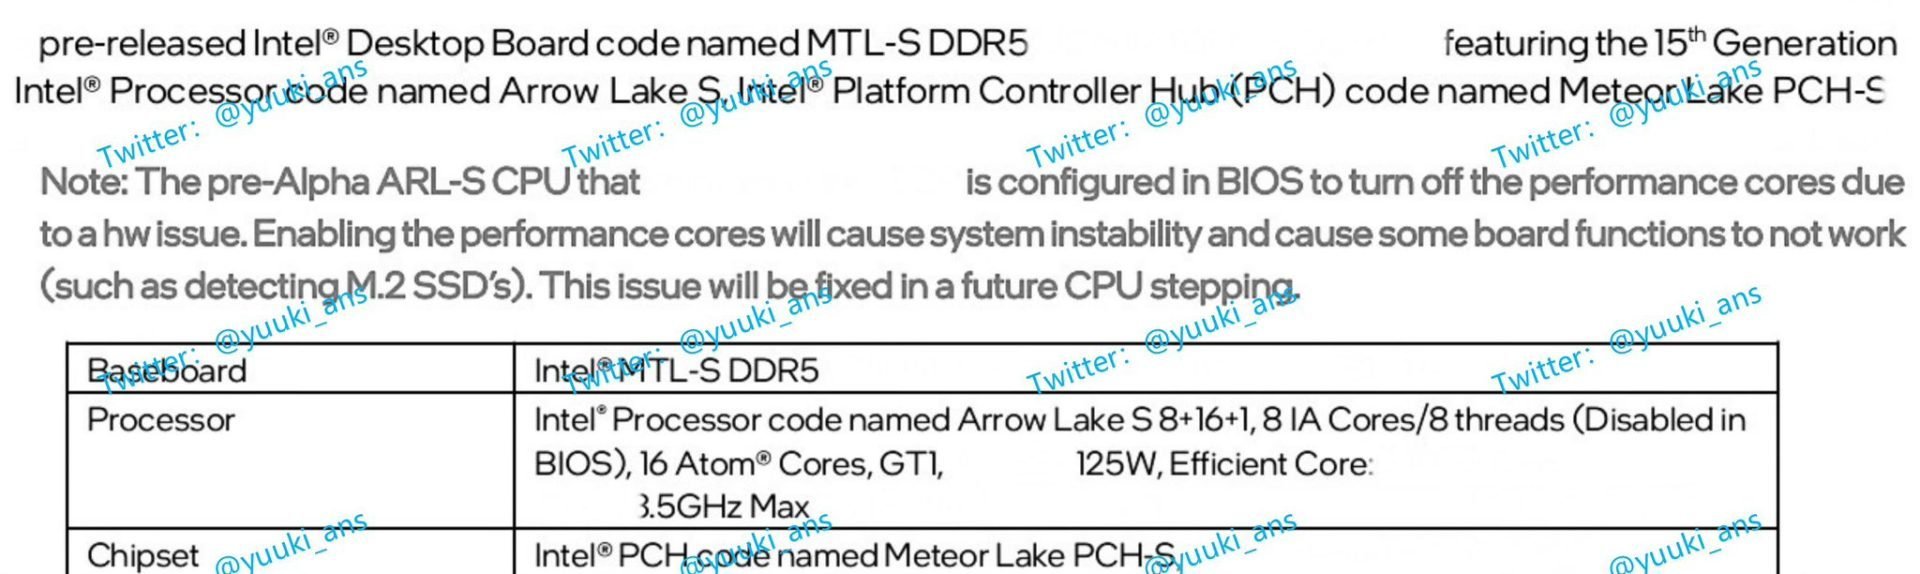 Intel Arrow Lake S LGA 1851